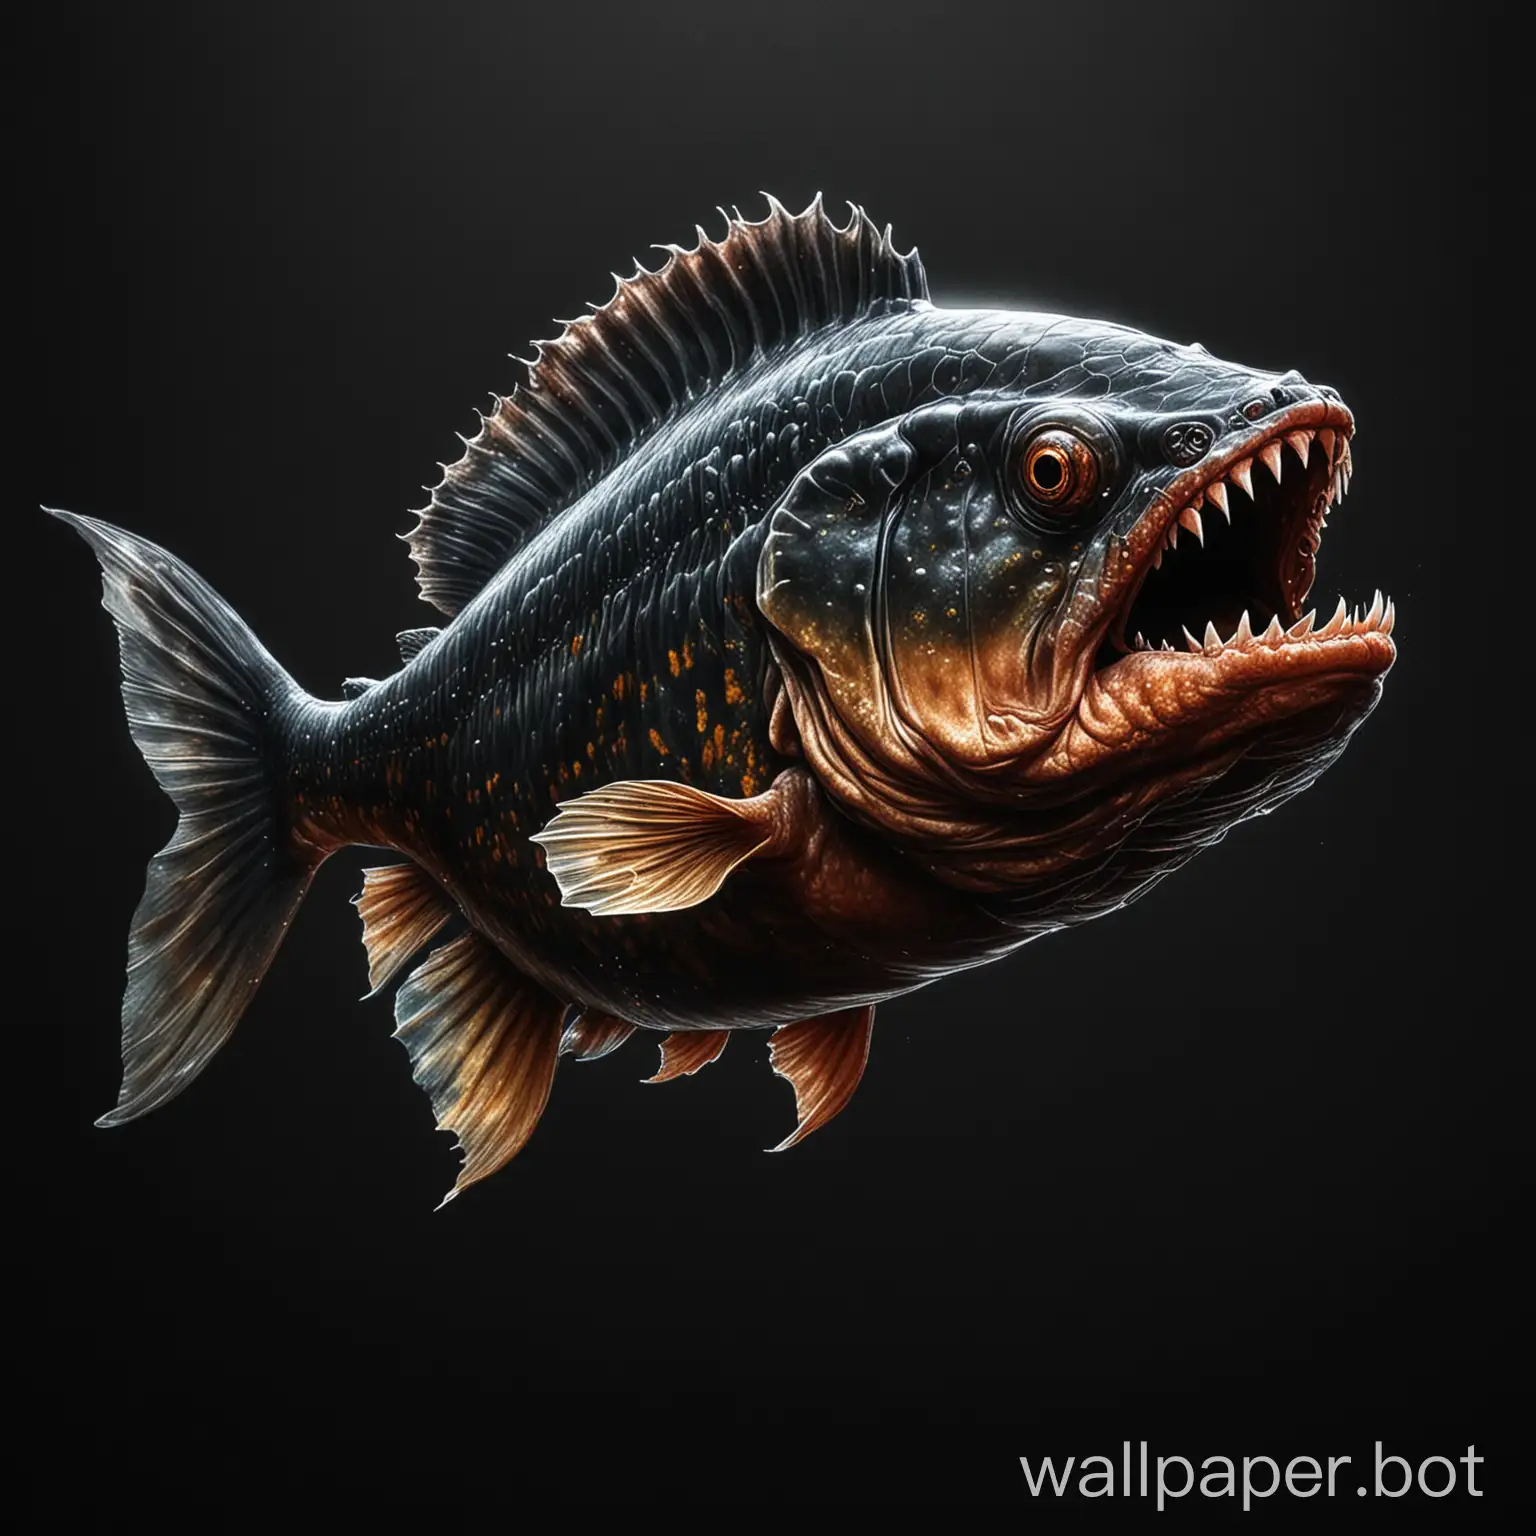 Draw a realistic fantasy piranha on a black background.